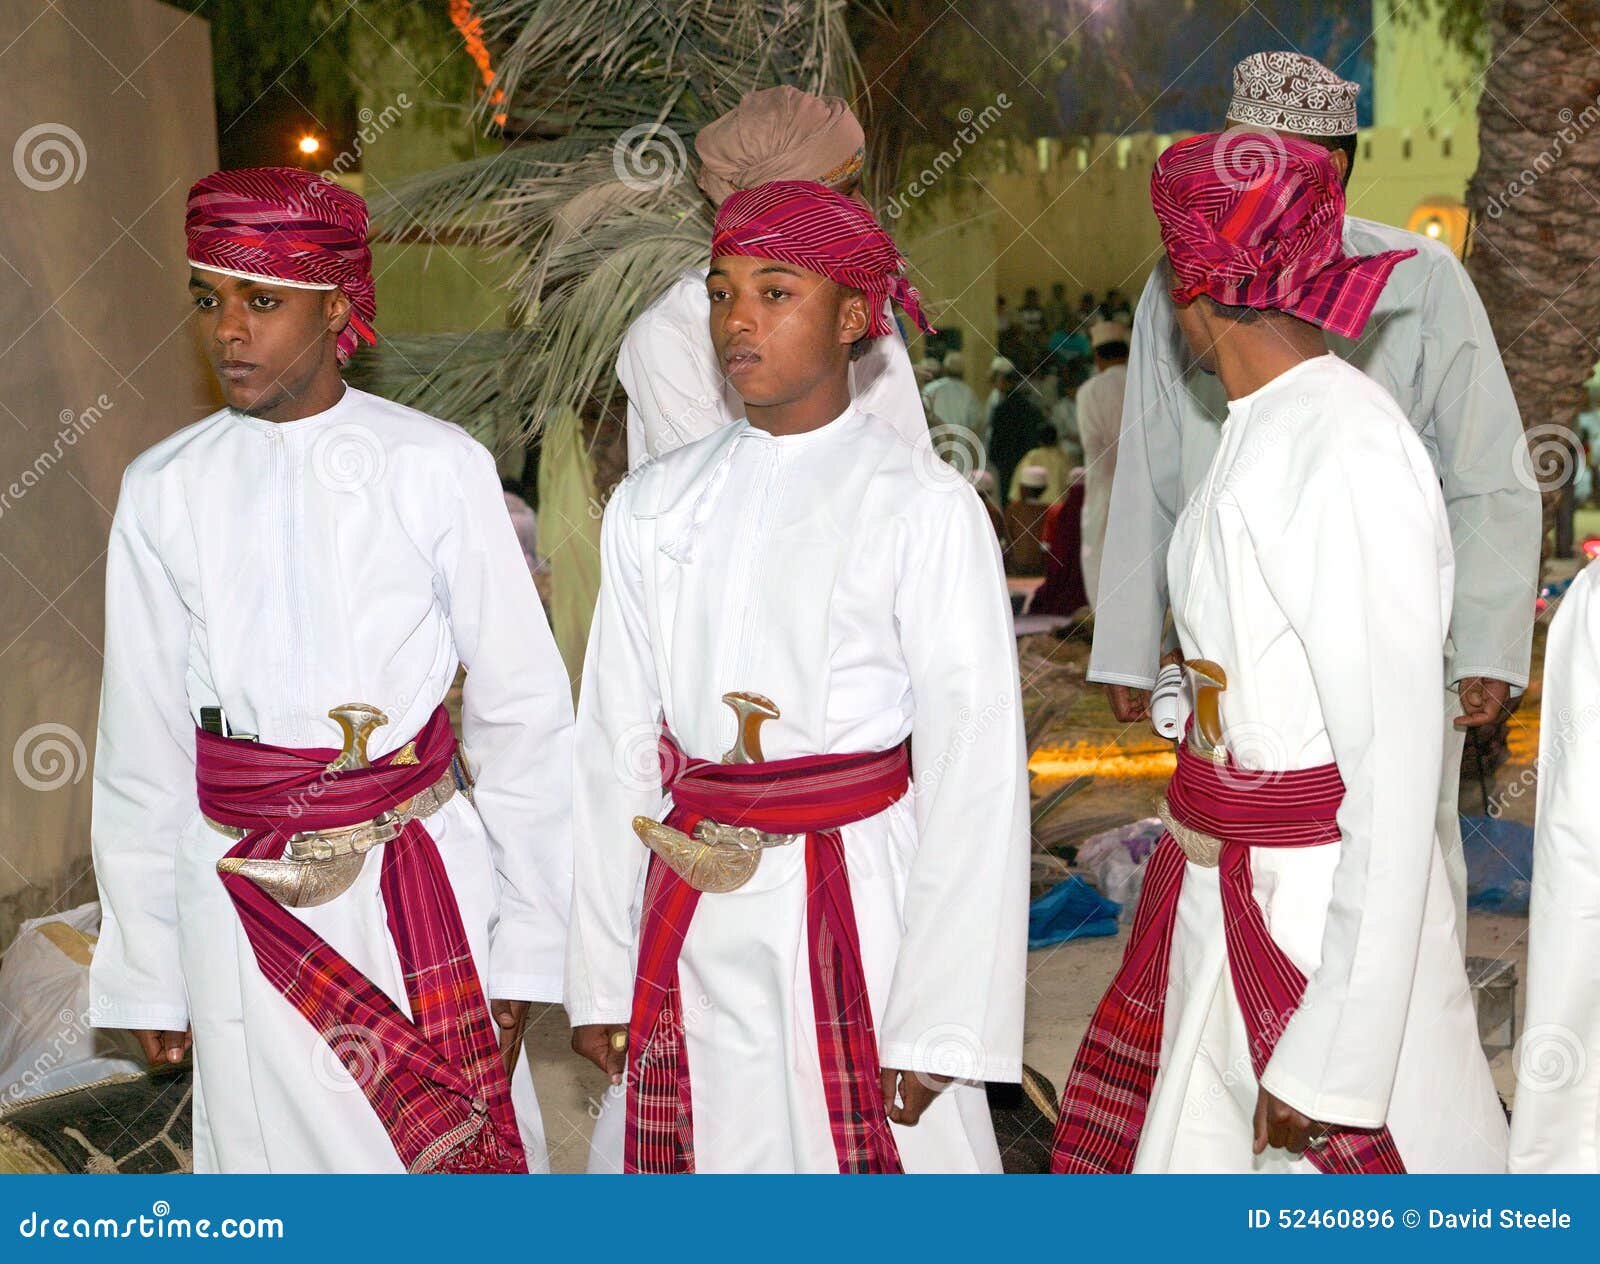 young-omani-men-three-traditional-dress-khanjars-arabian-daggers-cultural-festival-muscat-sultanate-oman-52460896.jpg